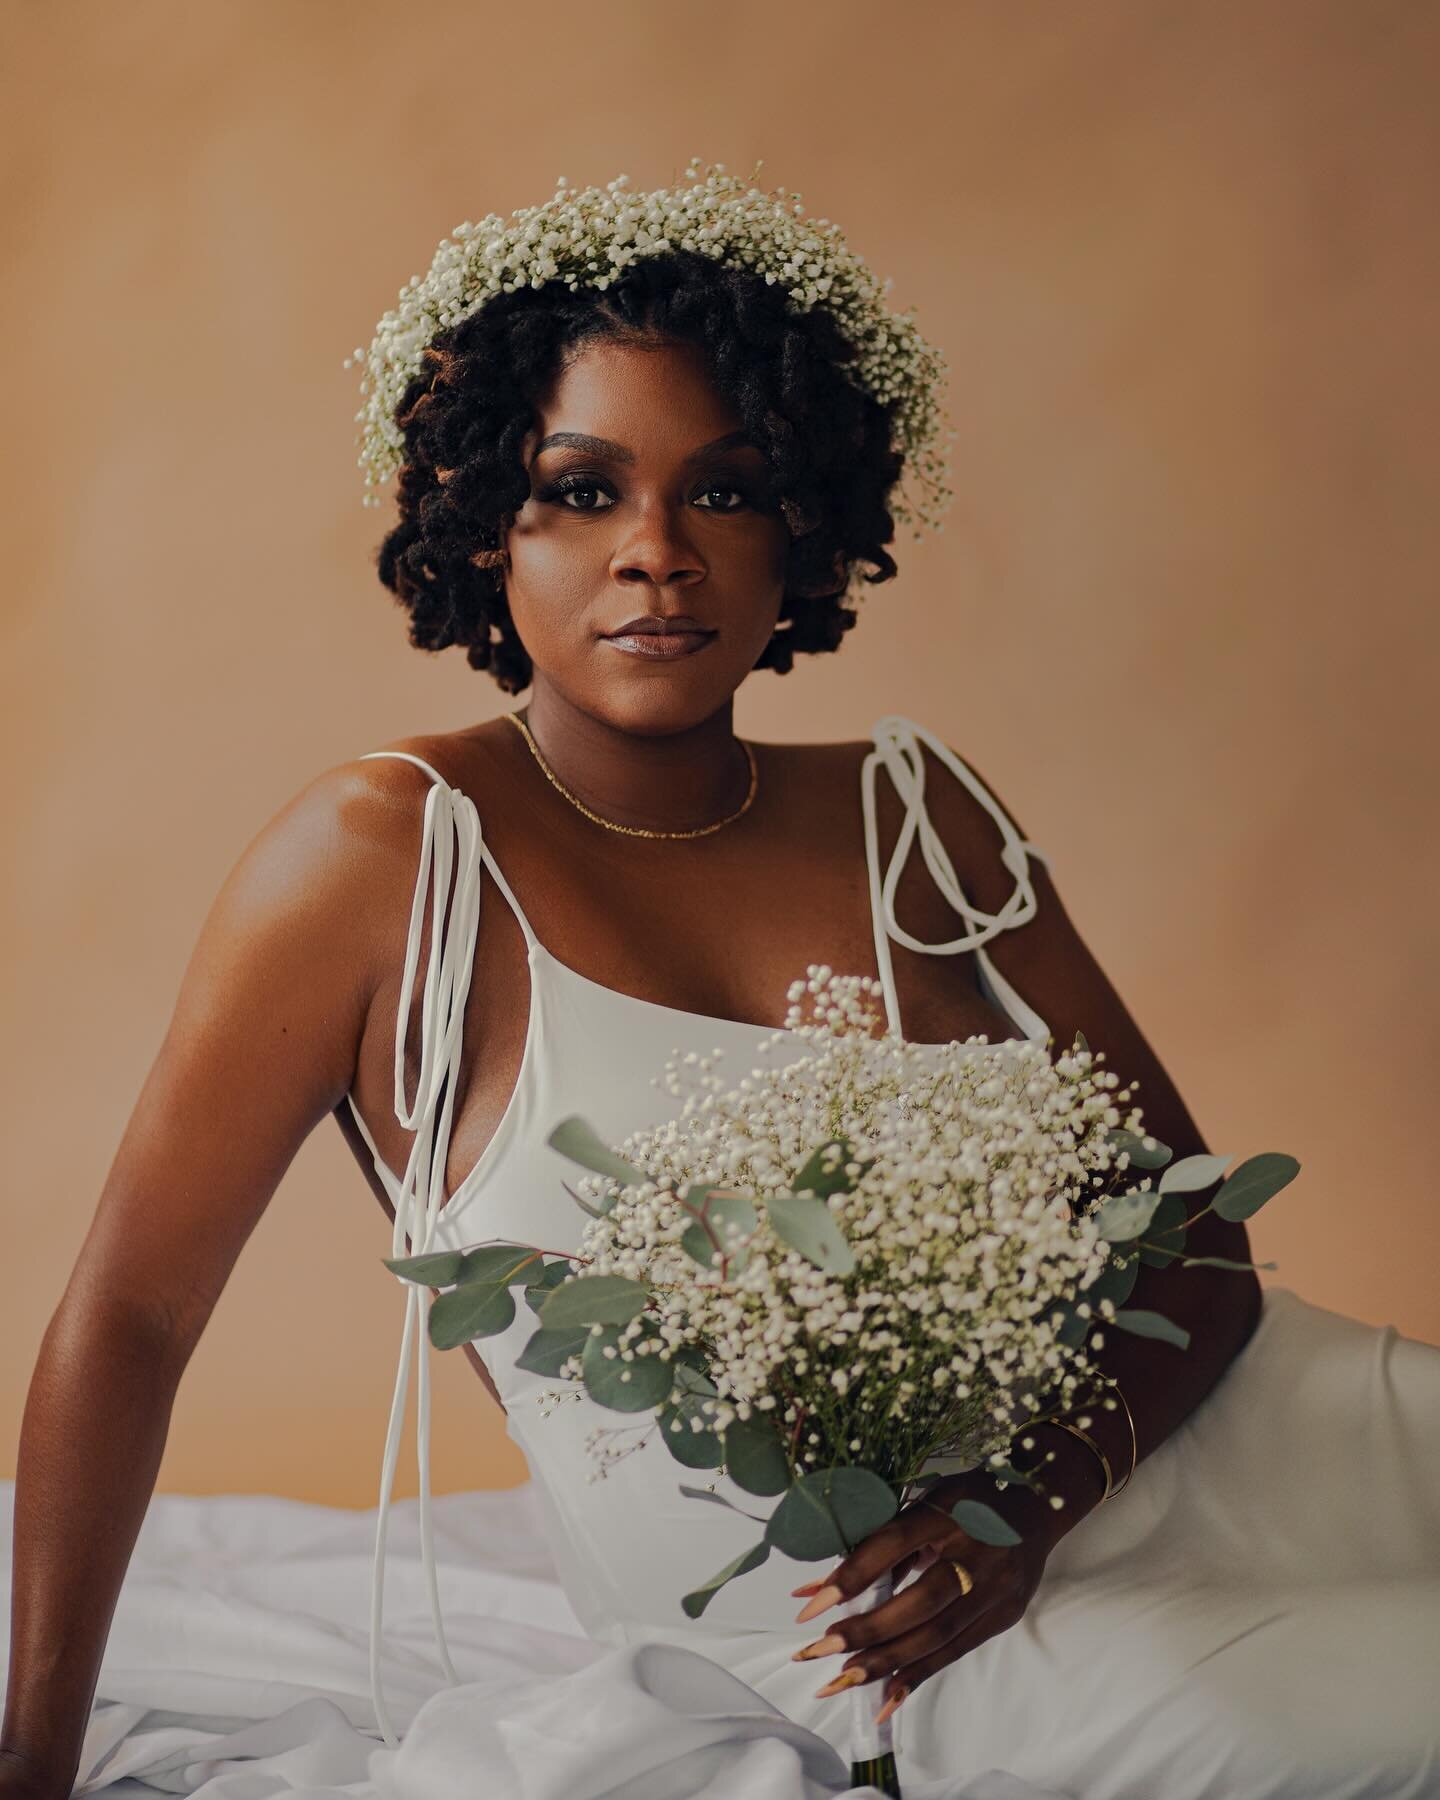 Sydnee
👼🏾🤎

📸 @blairjmeadows 

#bahamasphotographer #studioportraits